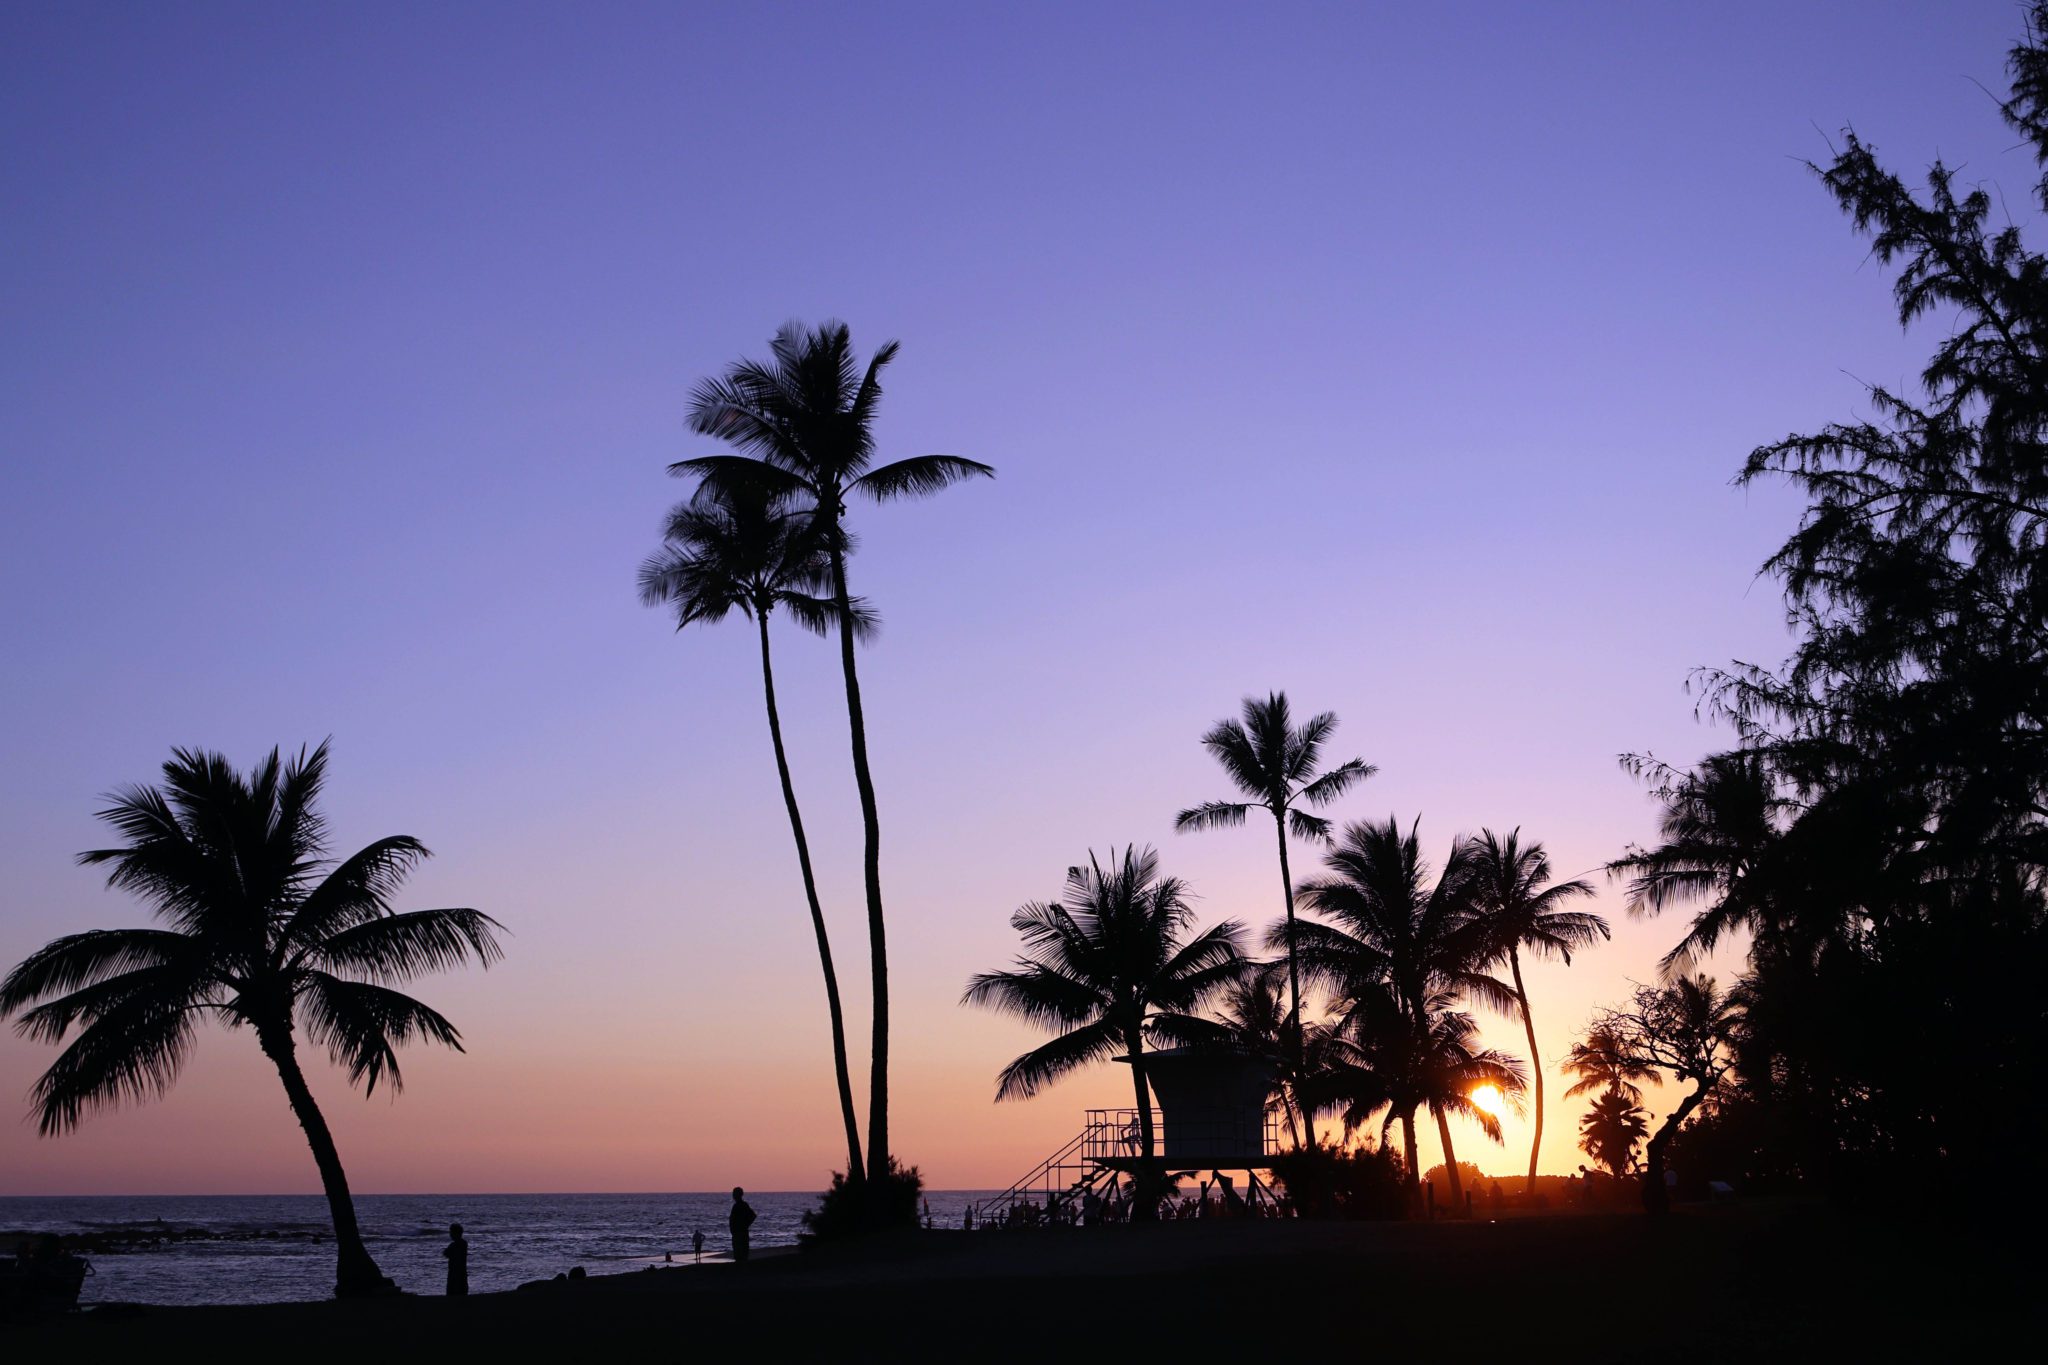 Poipu beach is one of the best beaches in Kauai- Top things to do in Kauai #kauai #hawaii #simplywander #poipubeach